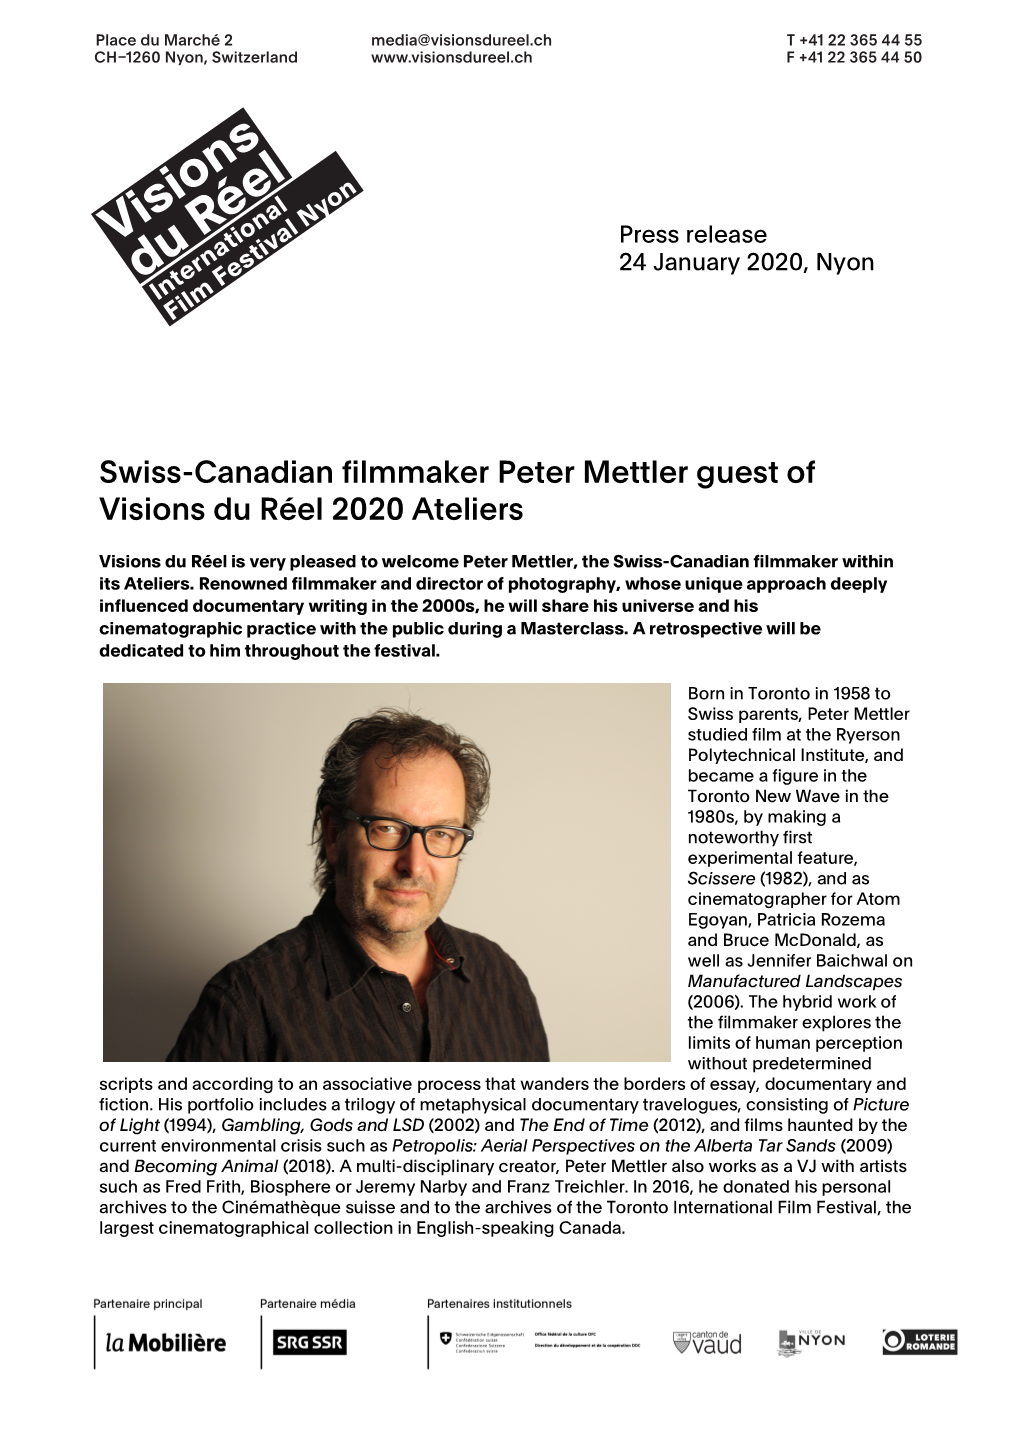 Swiss-Canadian Filmmaker Peter Mettler Guest of Visions Du Réel 2020 Ateliers